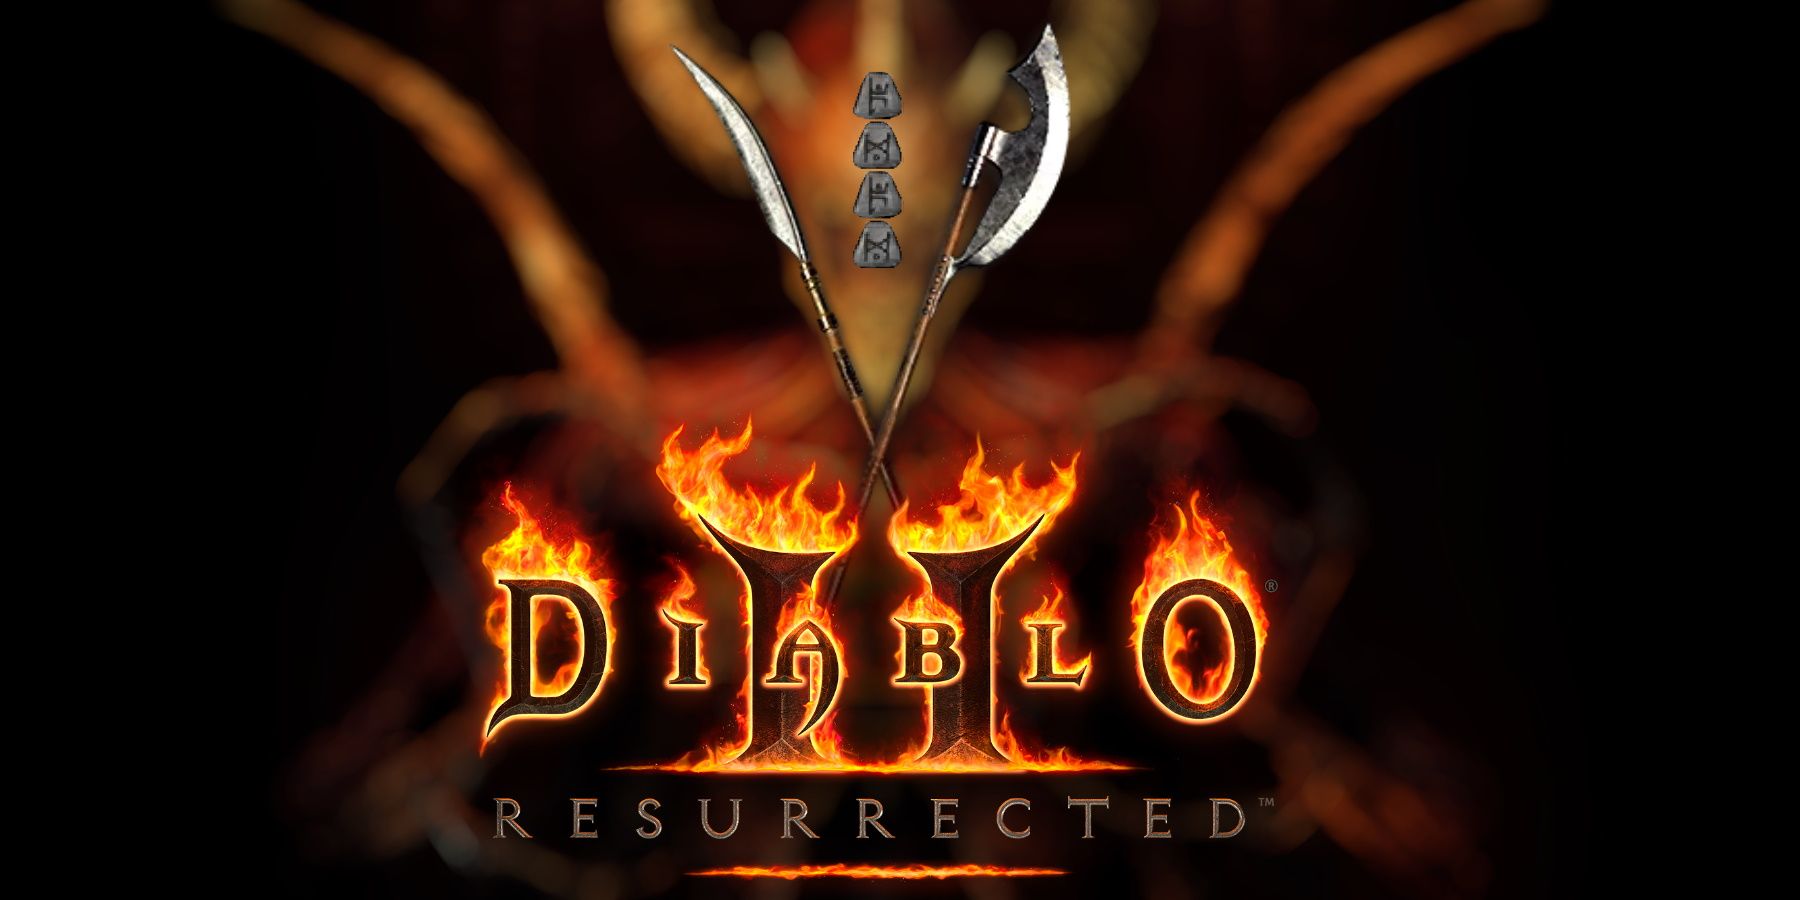 diablo 2 rune farming single player